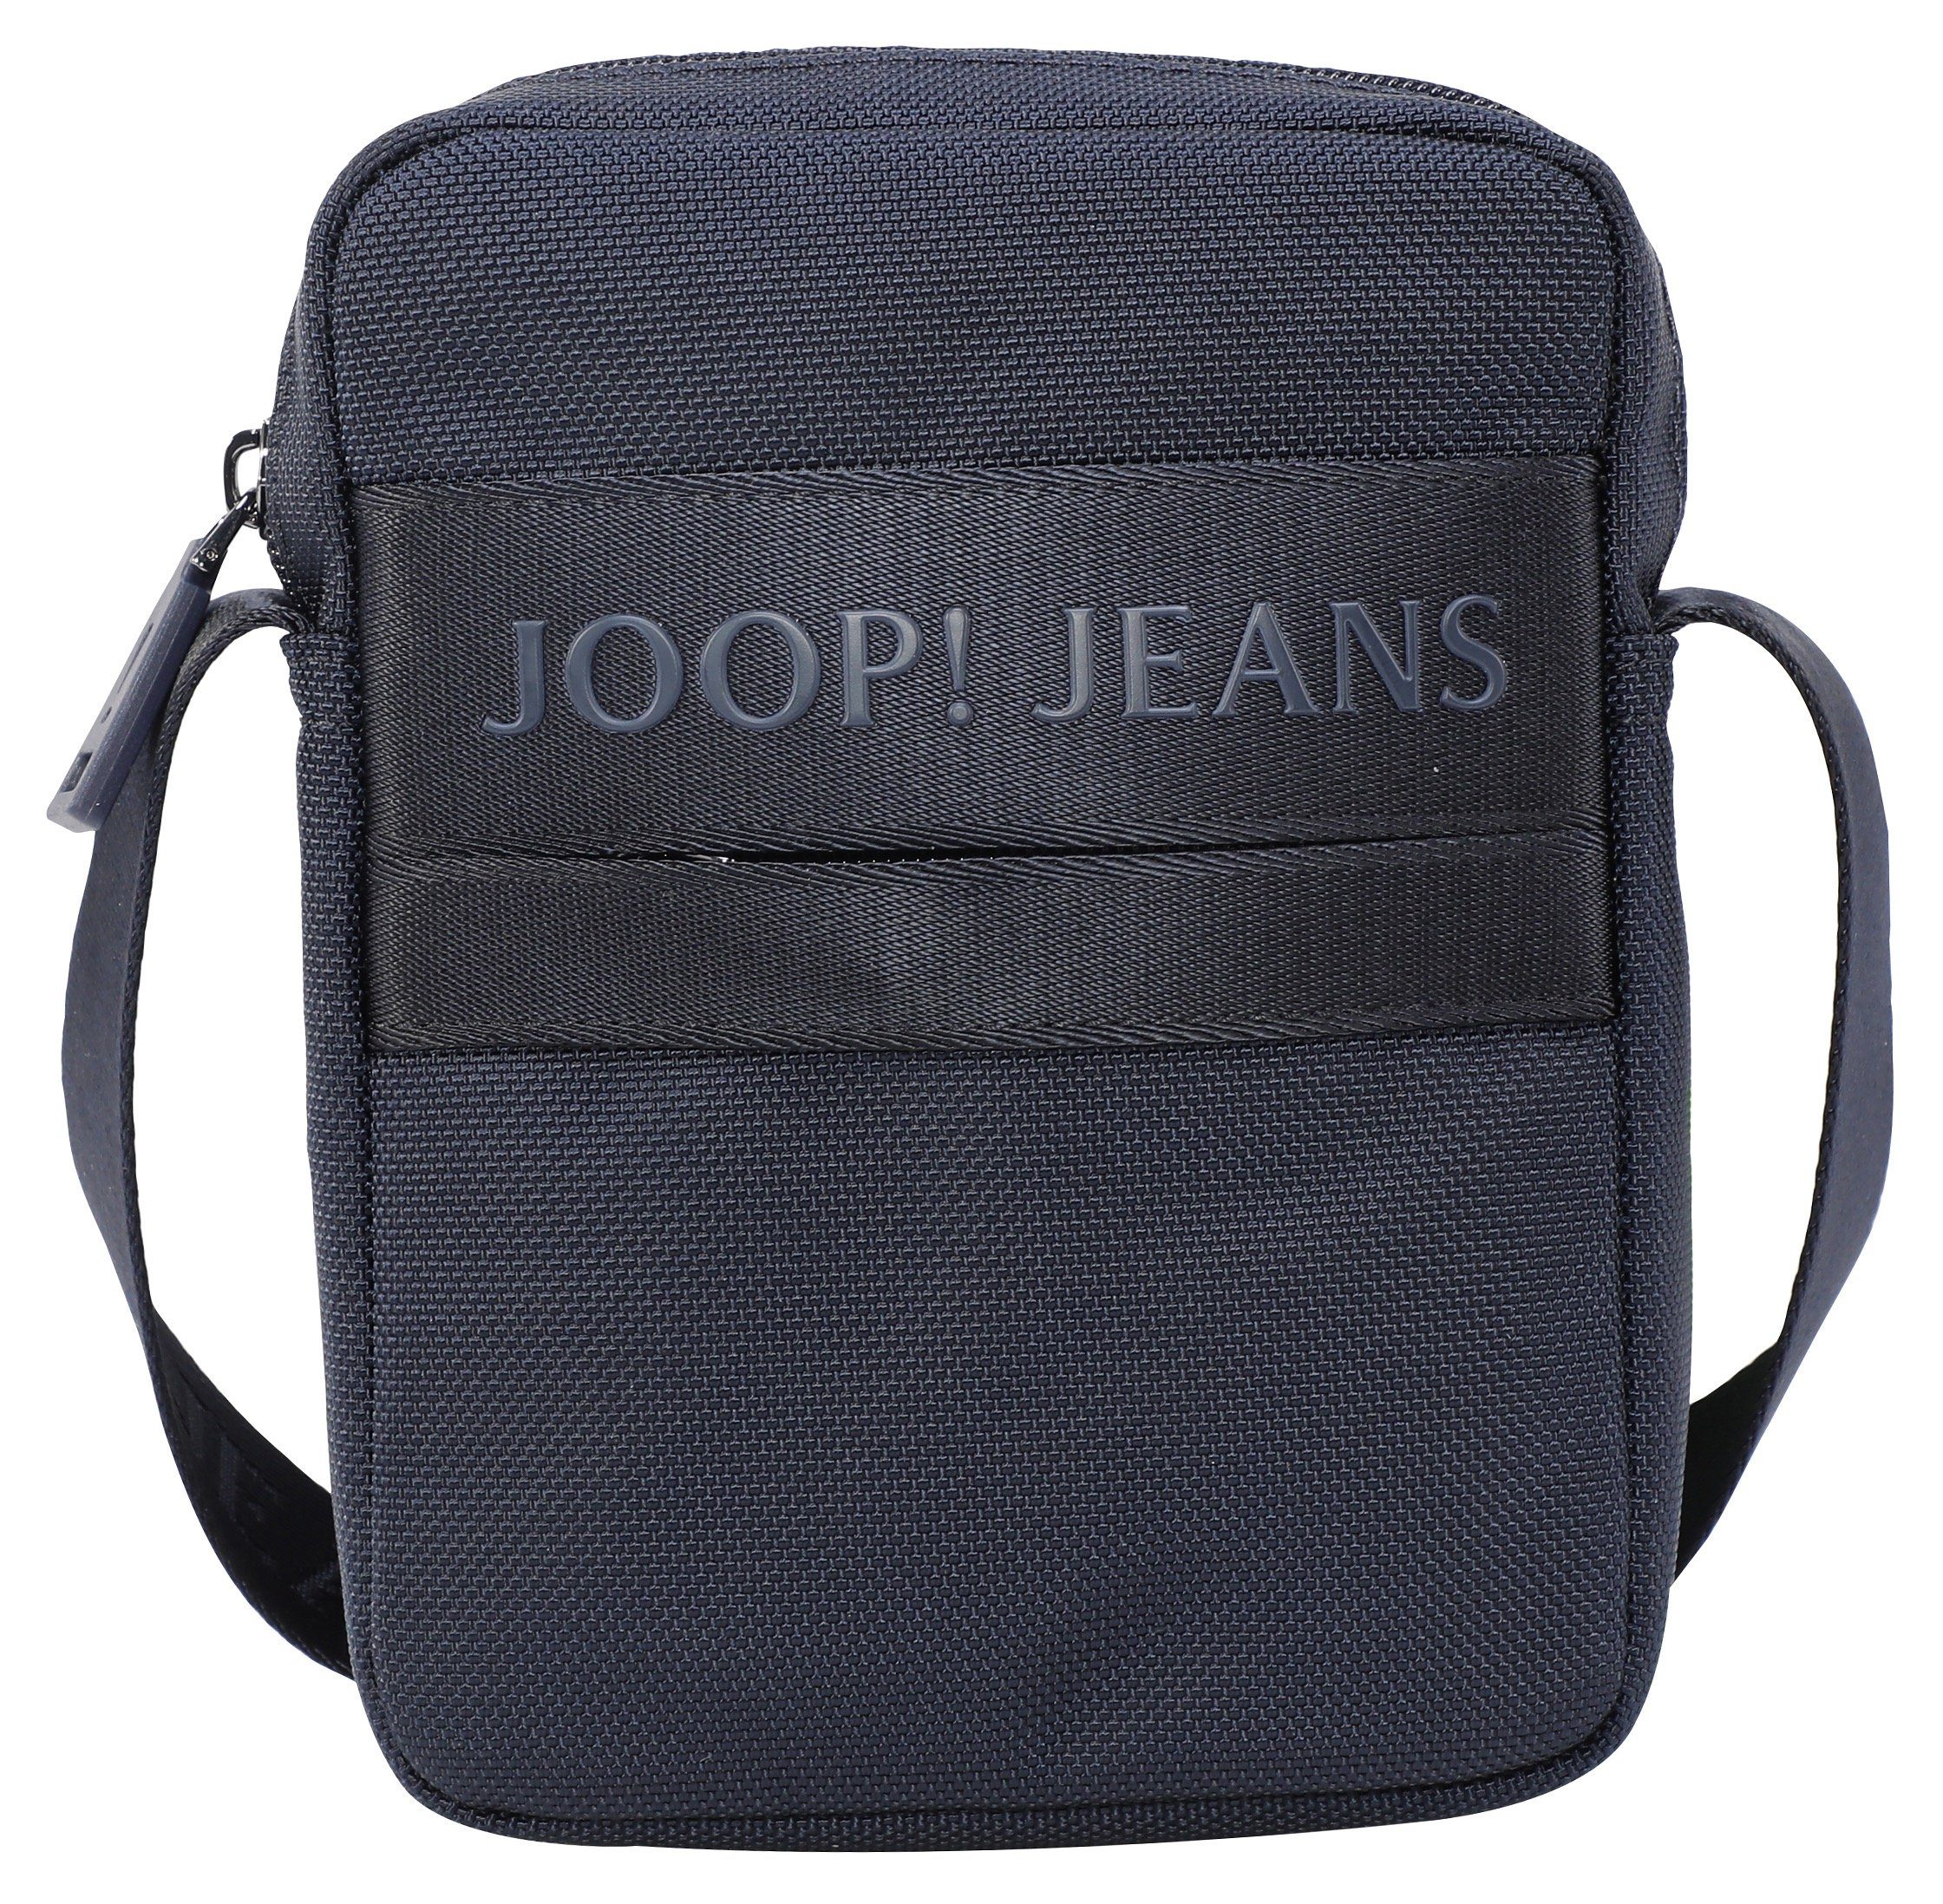 Joop Jeans Umhängetasche modica rafael shoulderbag xsvz, Schultertasche Schulterriementasche